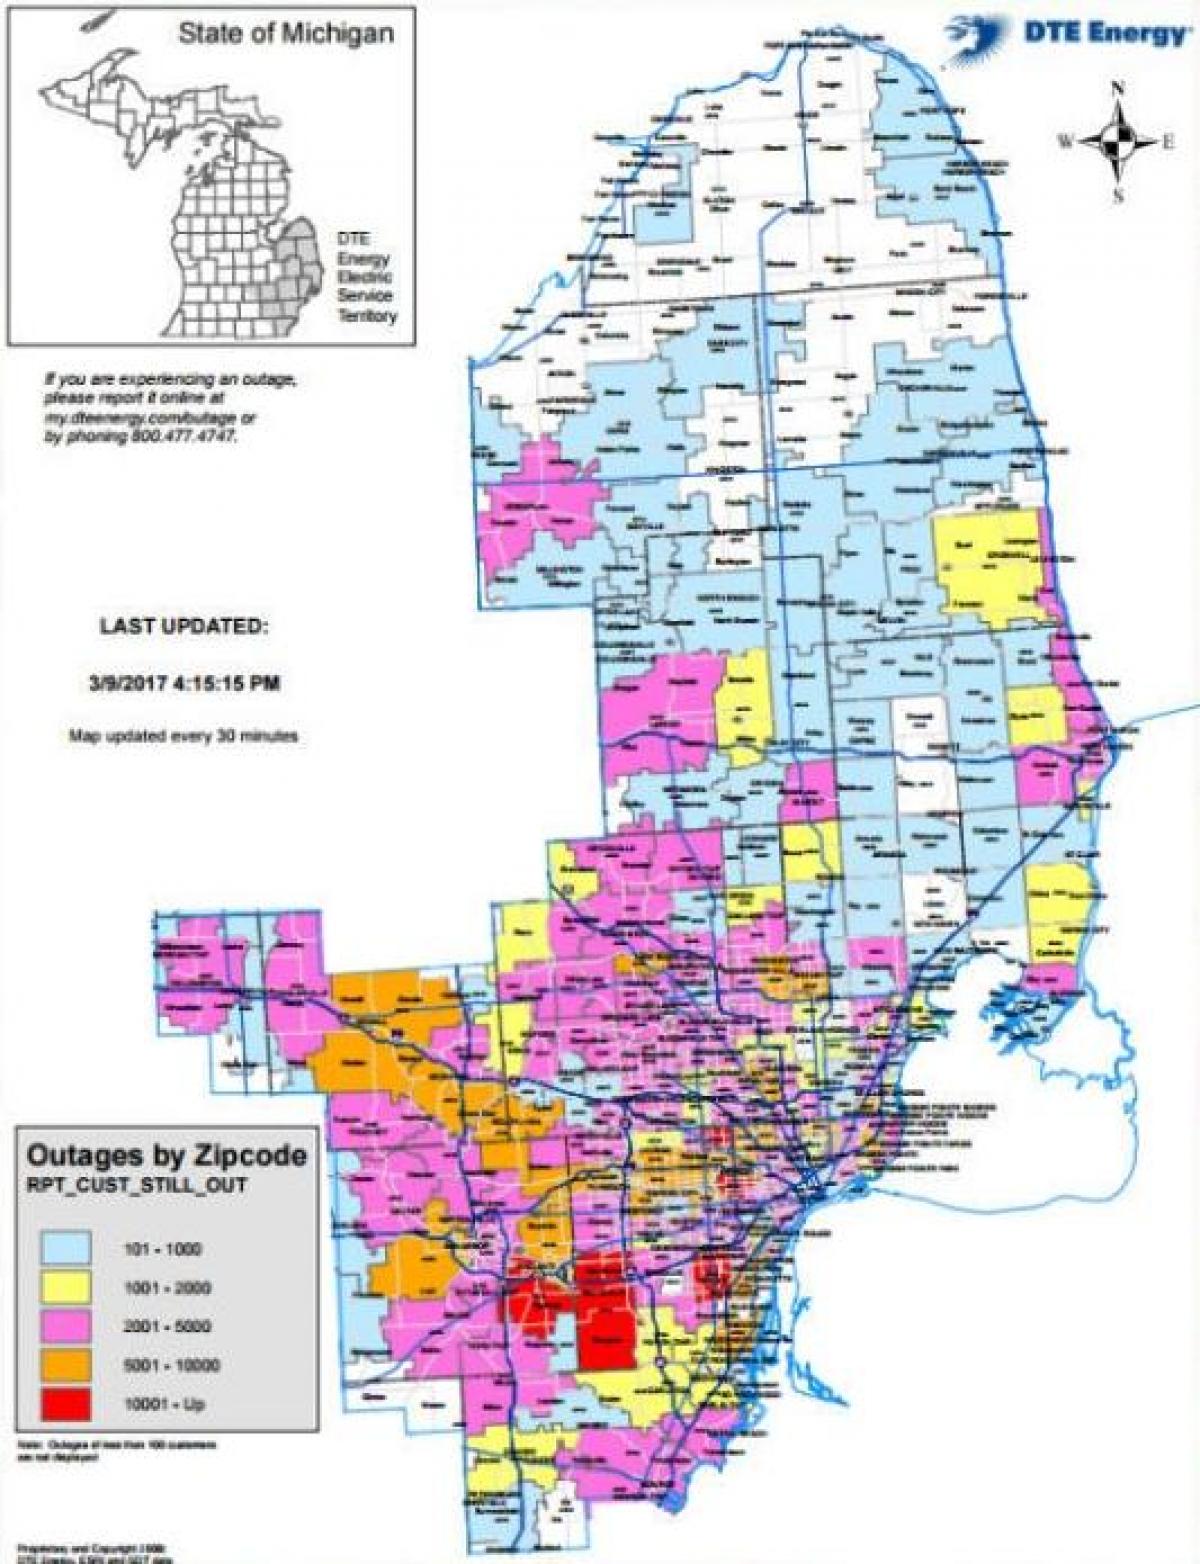 Detroit edison kapangyarihan outage mapa